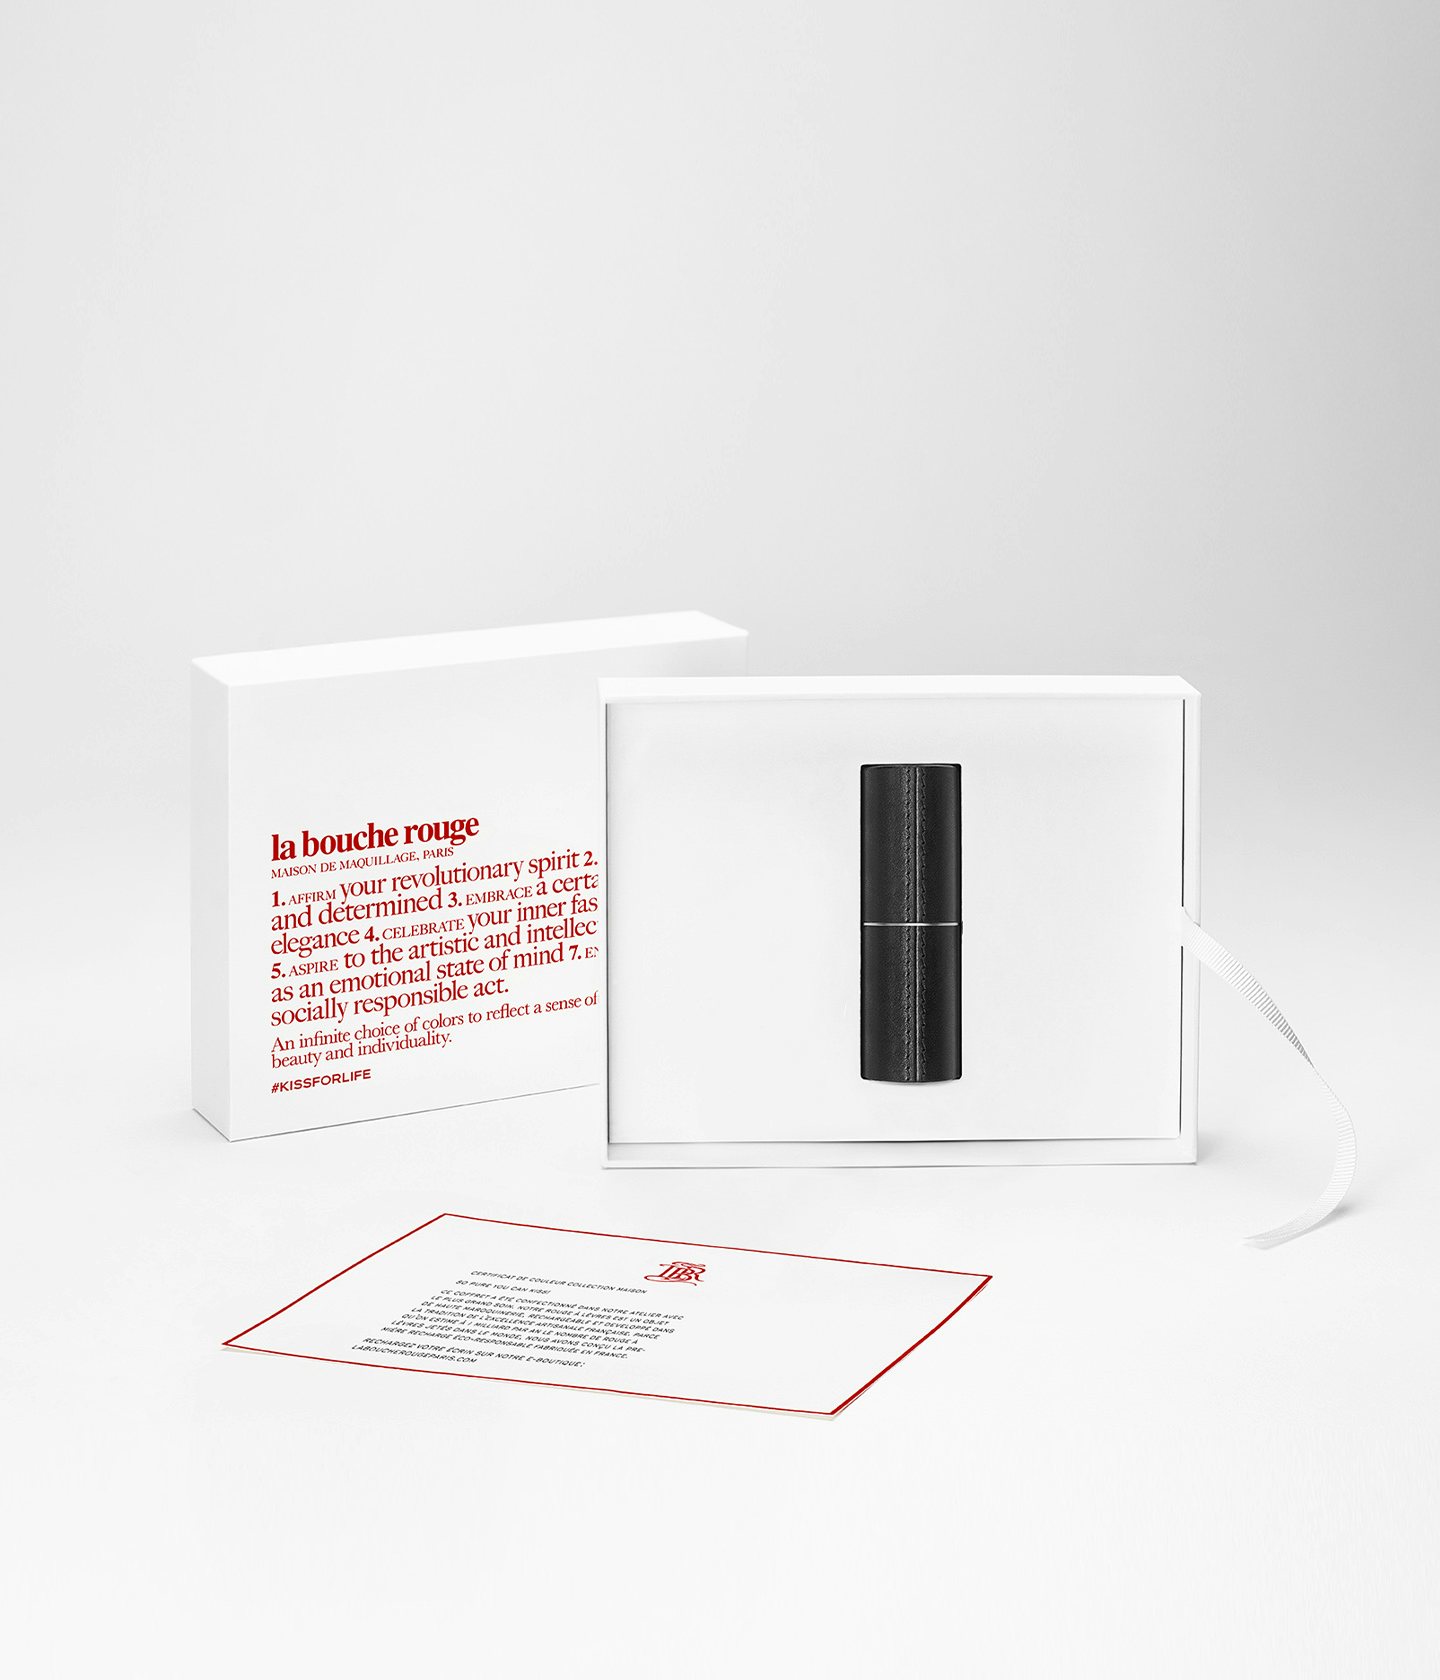 La bouche rouge black vegan leather case in the Manifesto packaging